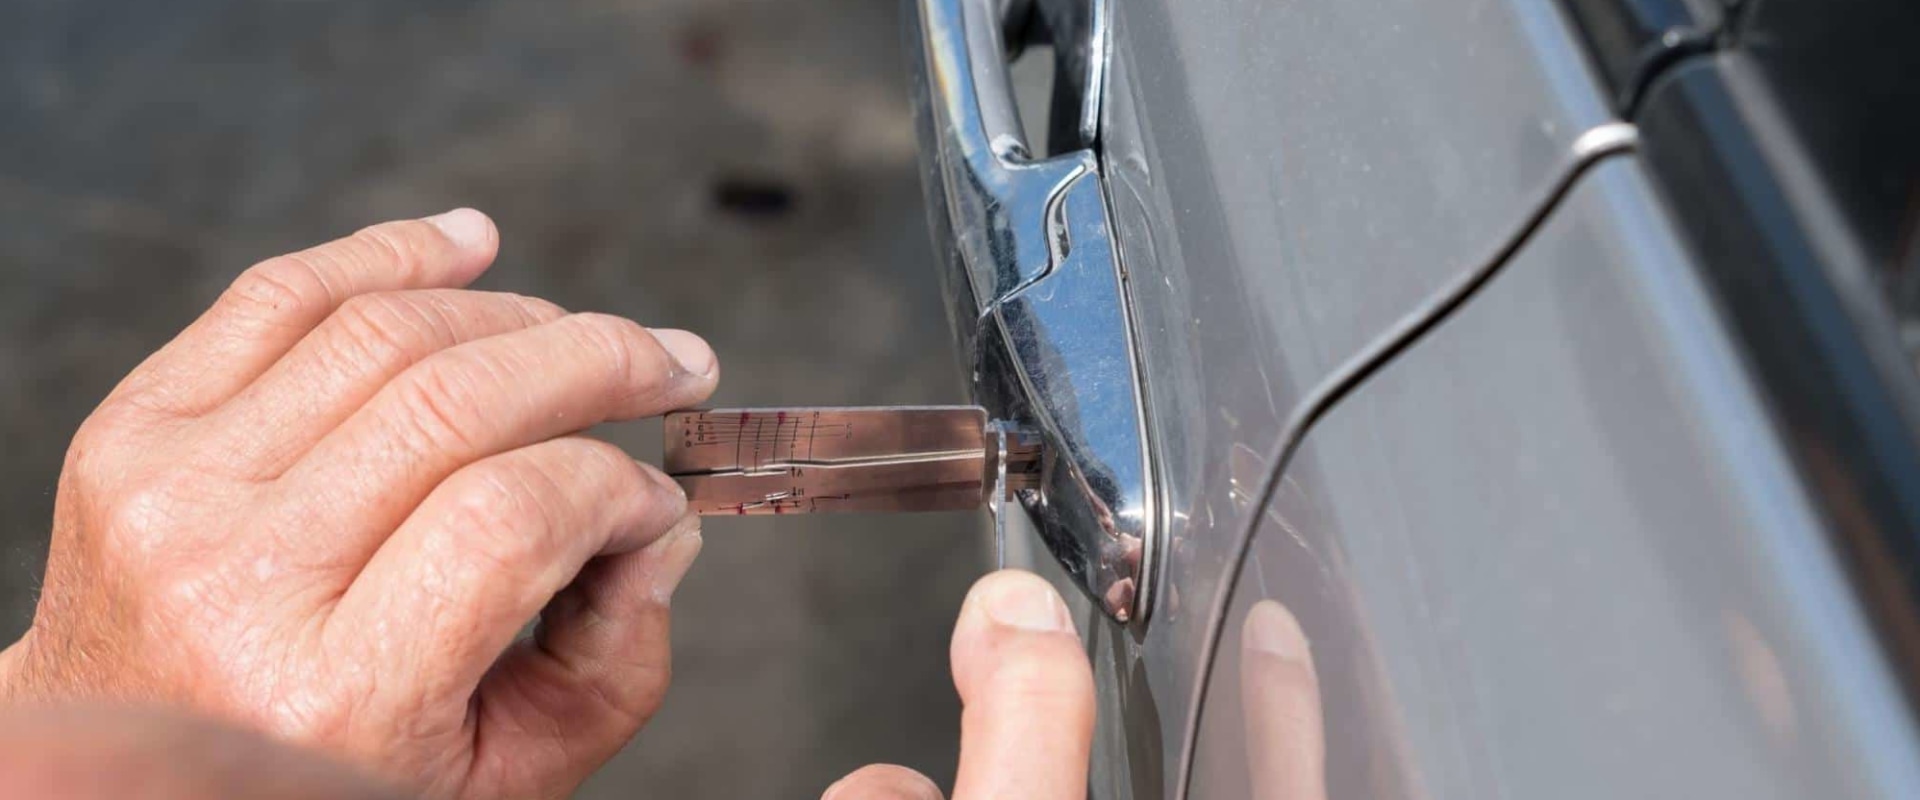 Unlocking Your Vehicle with a Car Locksmith in Spokane WA